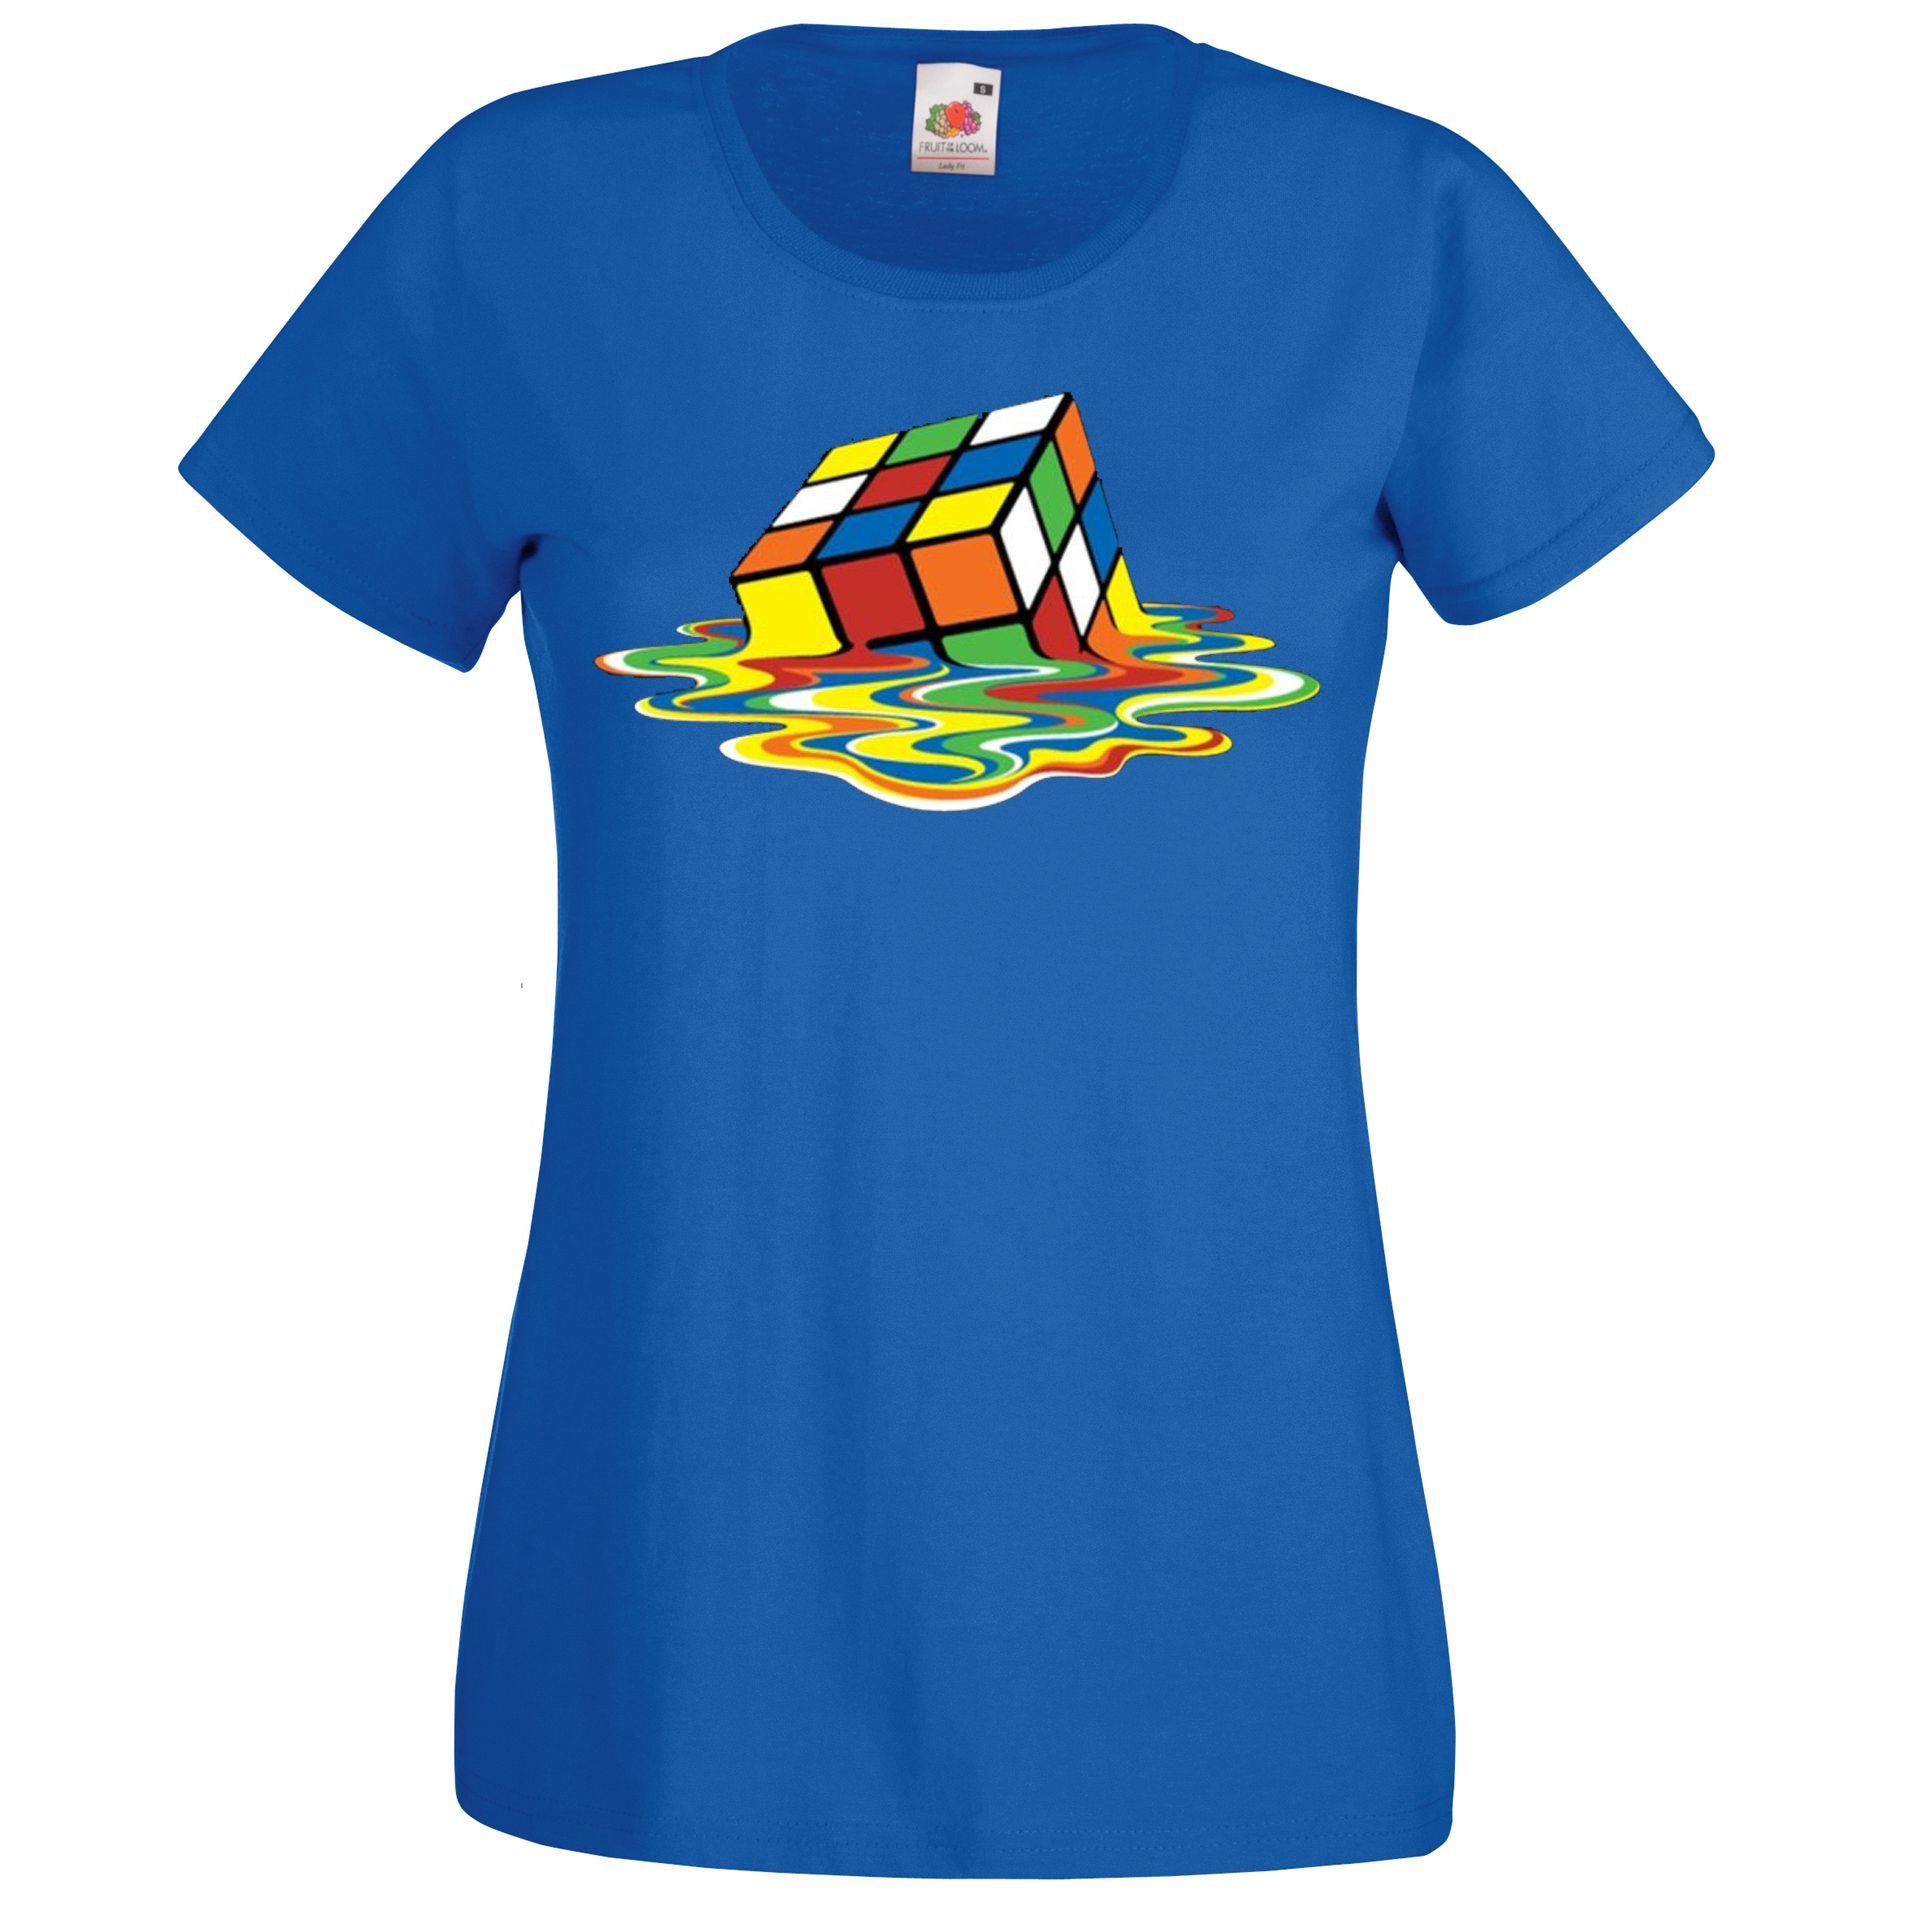 Youth Designz T-Shirt Zauberwürfel Damen Shirt mit witzigem Frontprint Royalblau